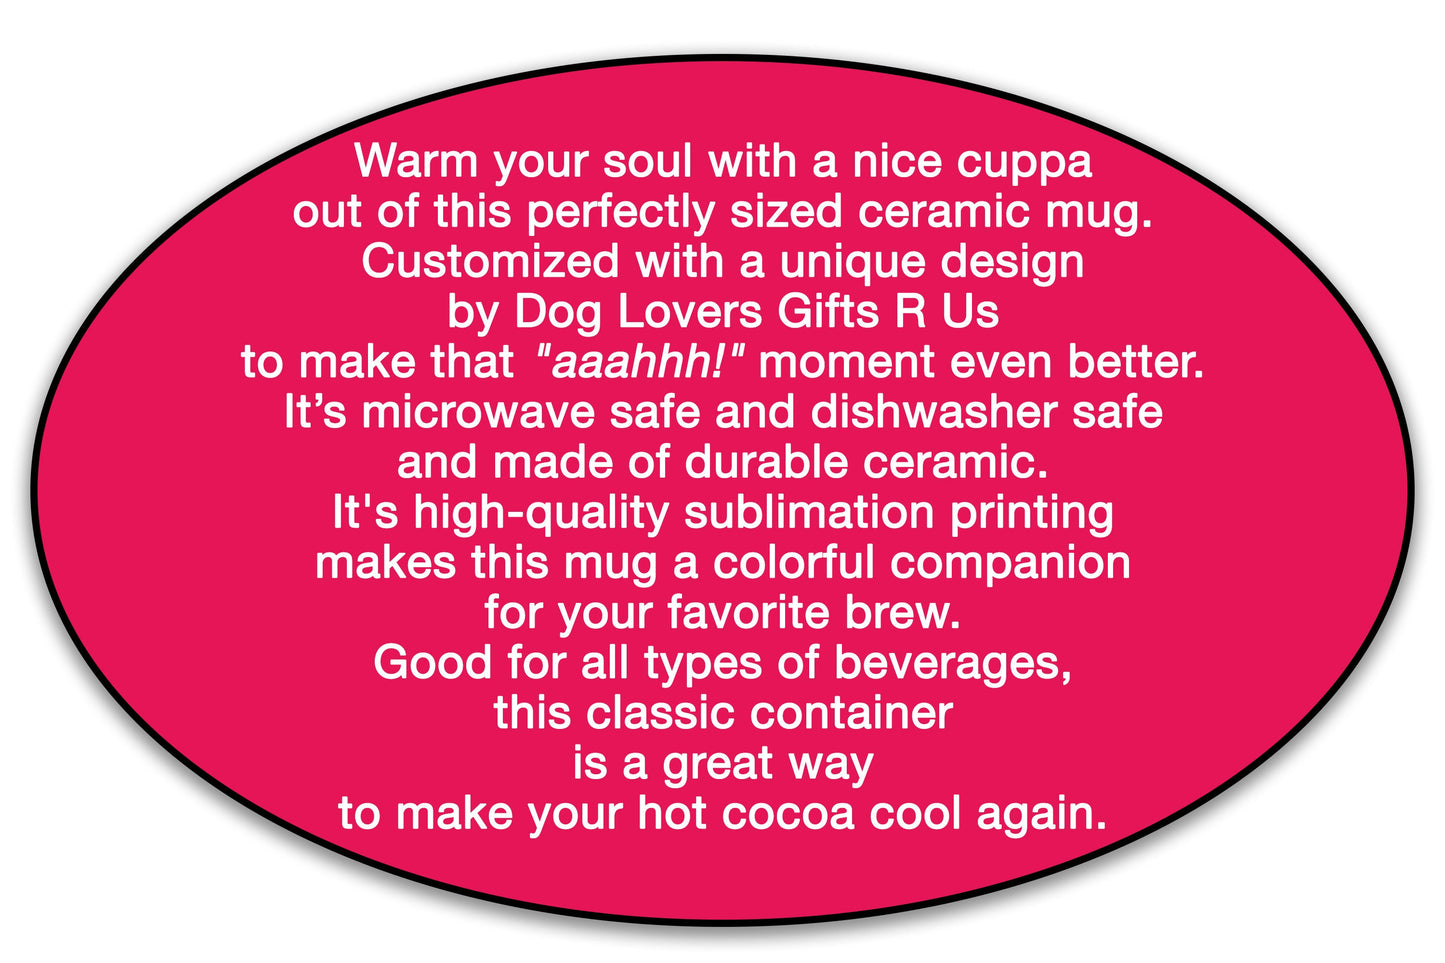 Spaniel Coffee Mug, String of Hearts, Cute Dog Lover Gift, Spaniel Mama, Fur Mama Gift, Dog Mama, Dog Coffee Mug, Springer Spaniel, Tea Cup